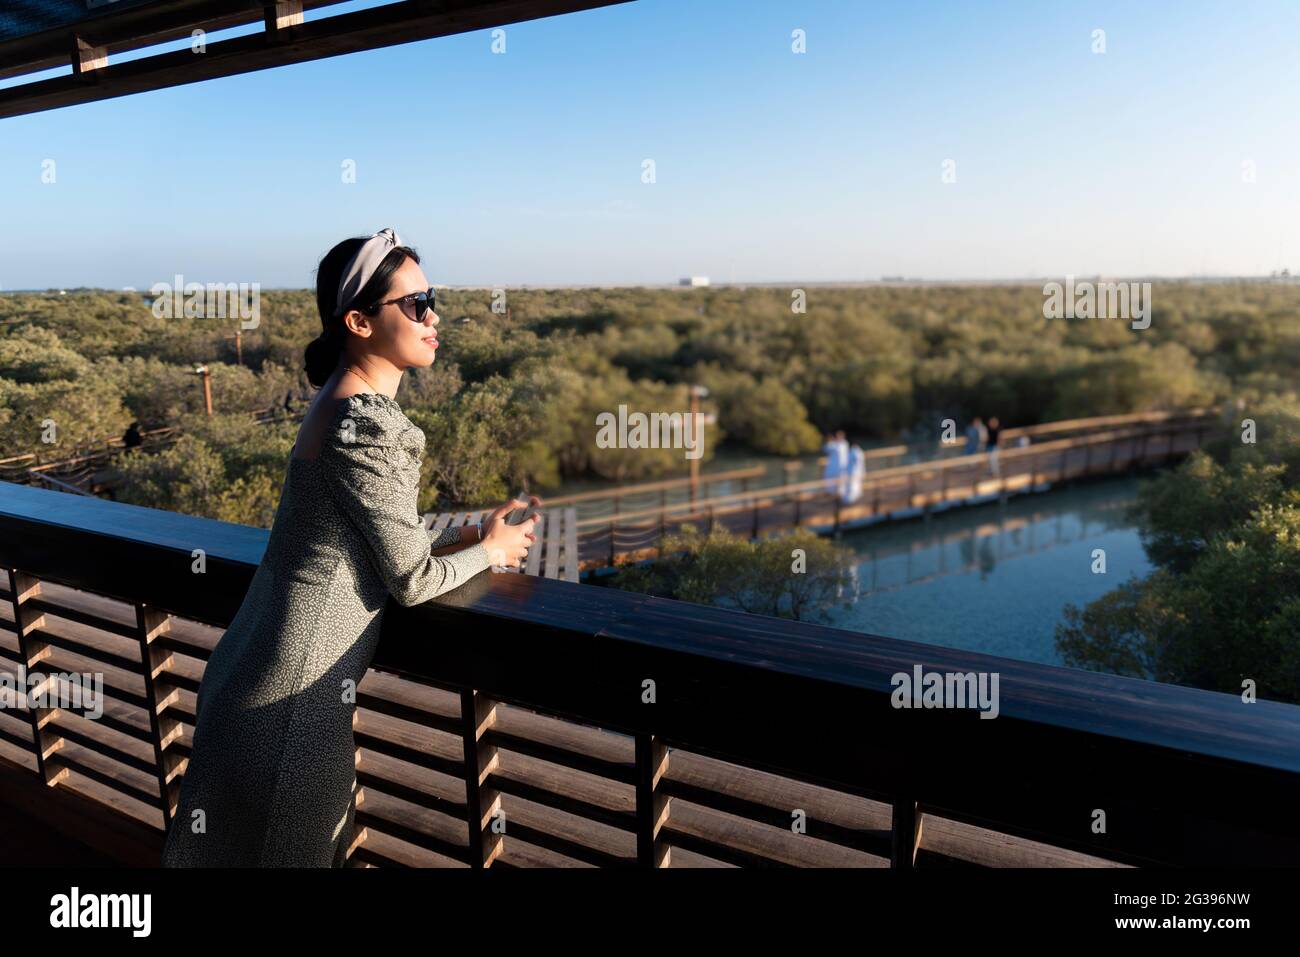 Asian female tourist visiting Mangrove walk seaside promenade public park in Jubail island Abu Dhabi the capital city of United Arab Emirates Stock Photo